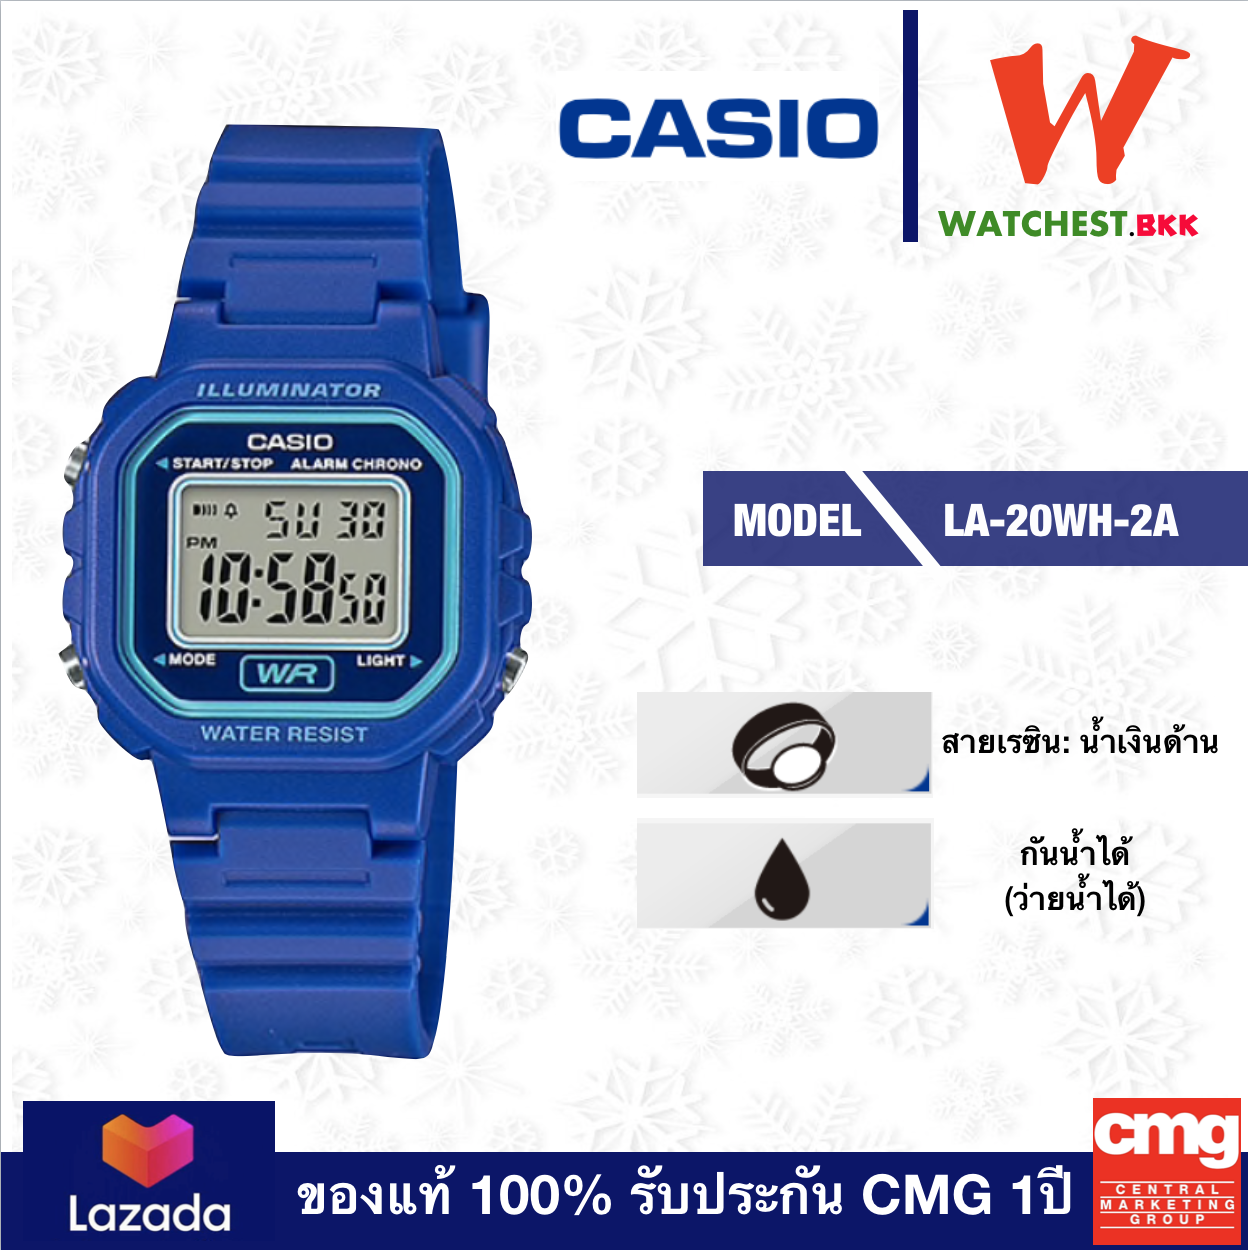 casio นาฬิกาข้อมือเด็ก สายยาง สีน้ำเงิน กันน้ำได้ 50m รุ่น LA-20WH-2A, คาสิโอ้ สายยาง สีน้ำเงิน (watchestbkk คาสิโอ แท้ ของแท้100% ประกัน CMG)